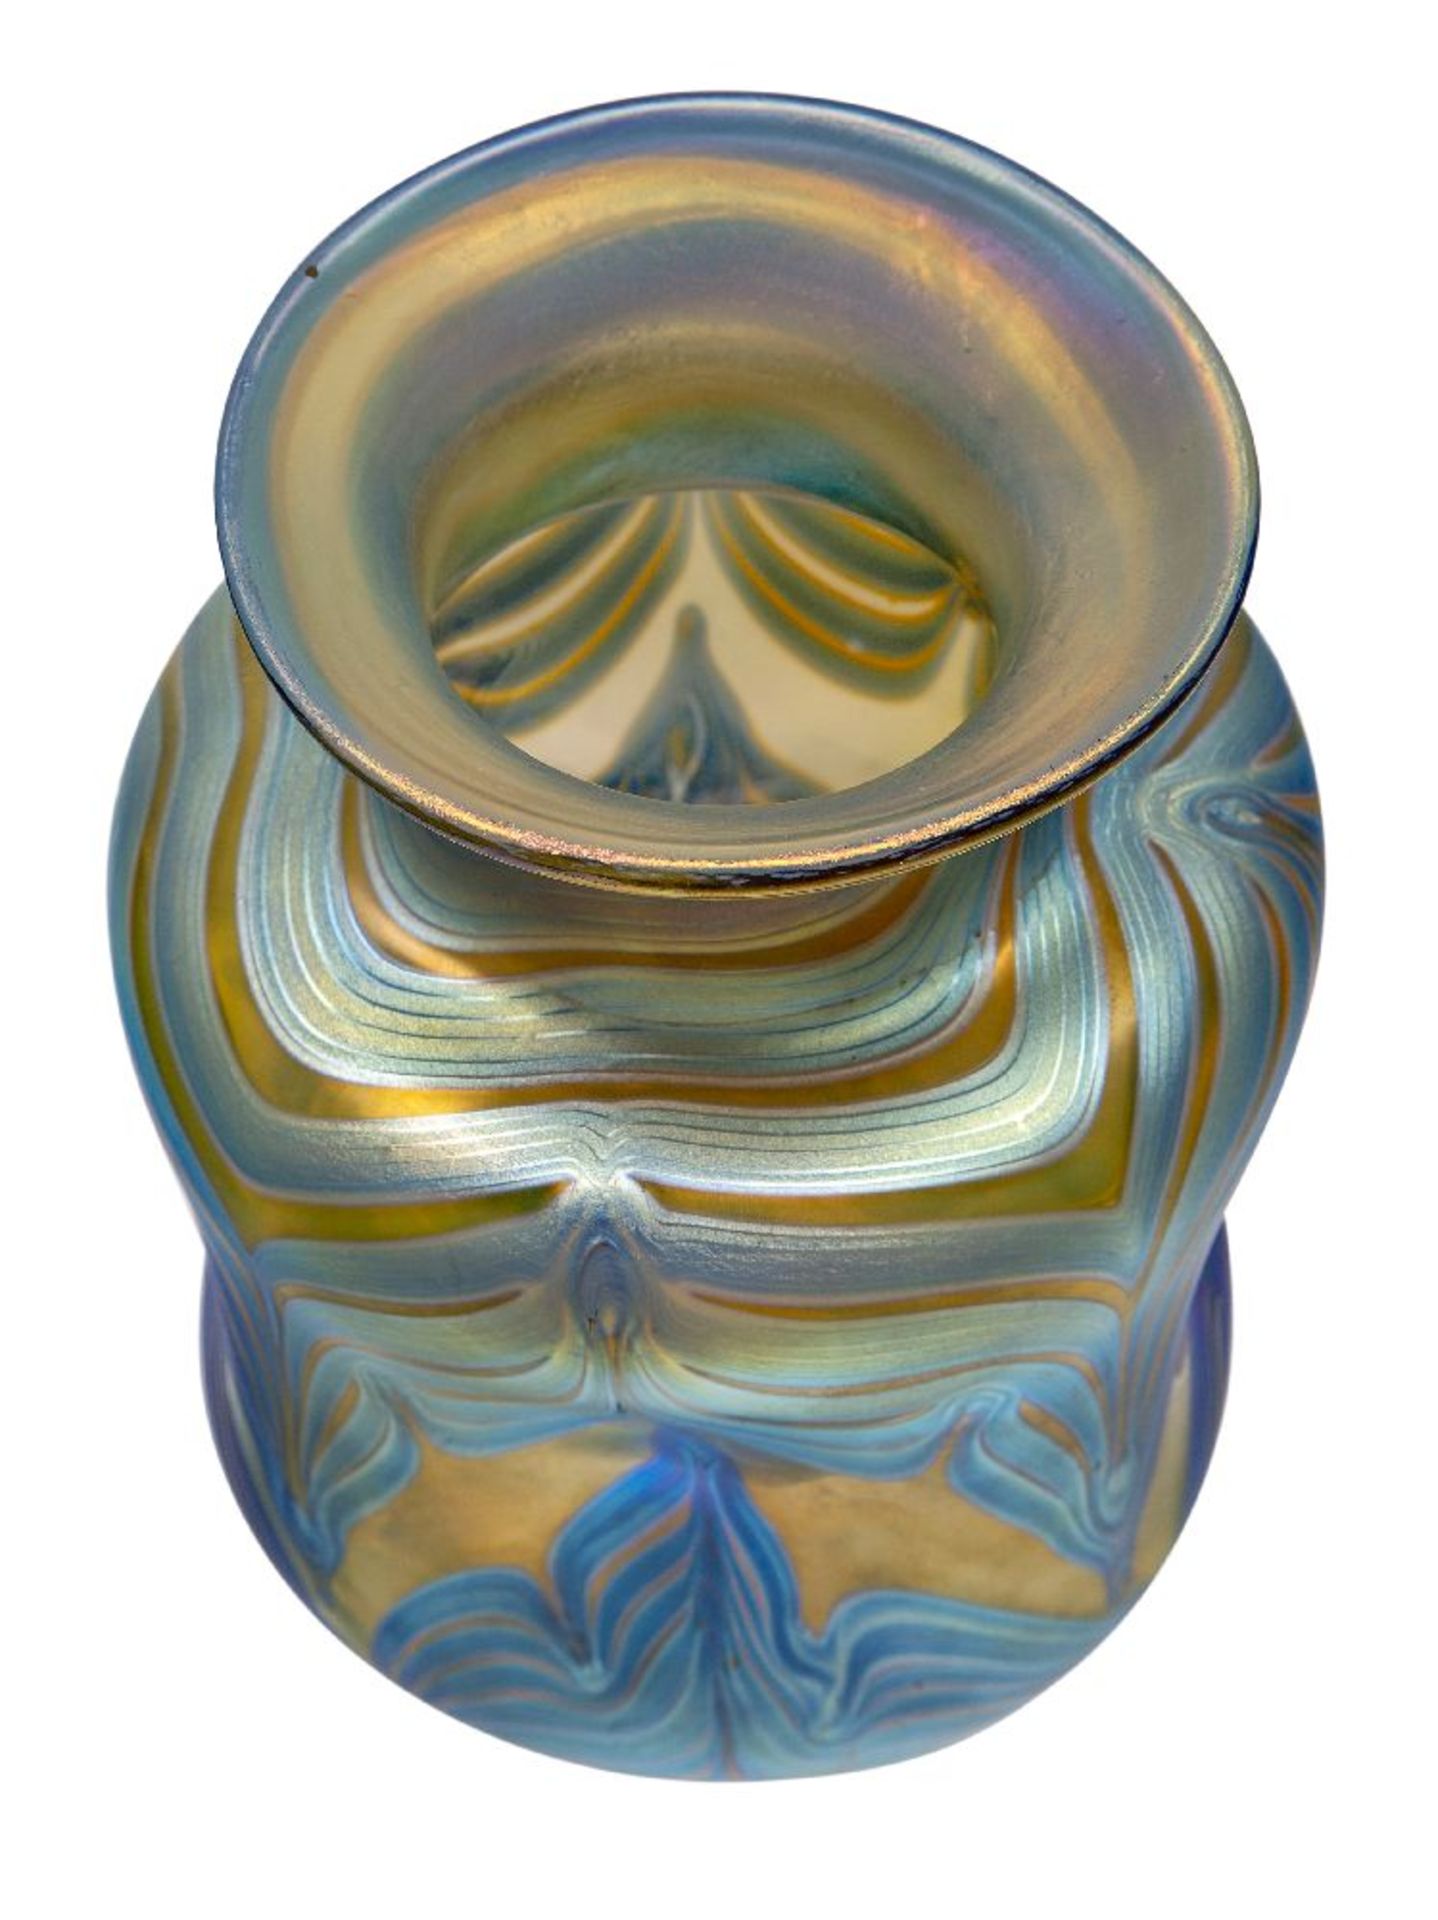 Loetz (Austrian), an iridescent Phaenomen dimpled glass vase with everted rim, c.1900, PG 202, PN - Bild 2 aus 3